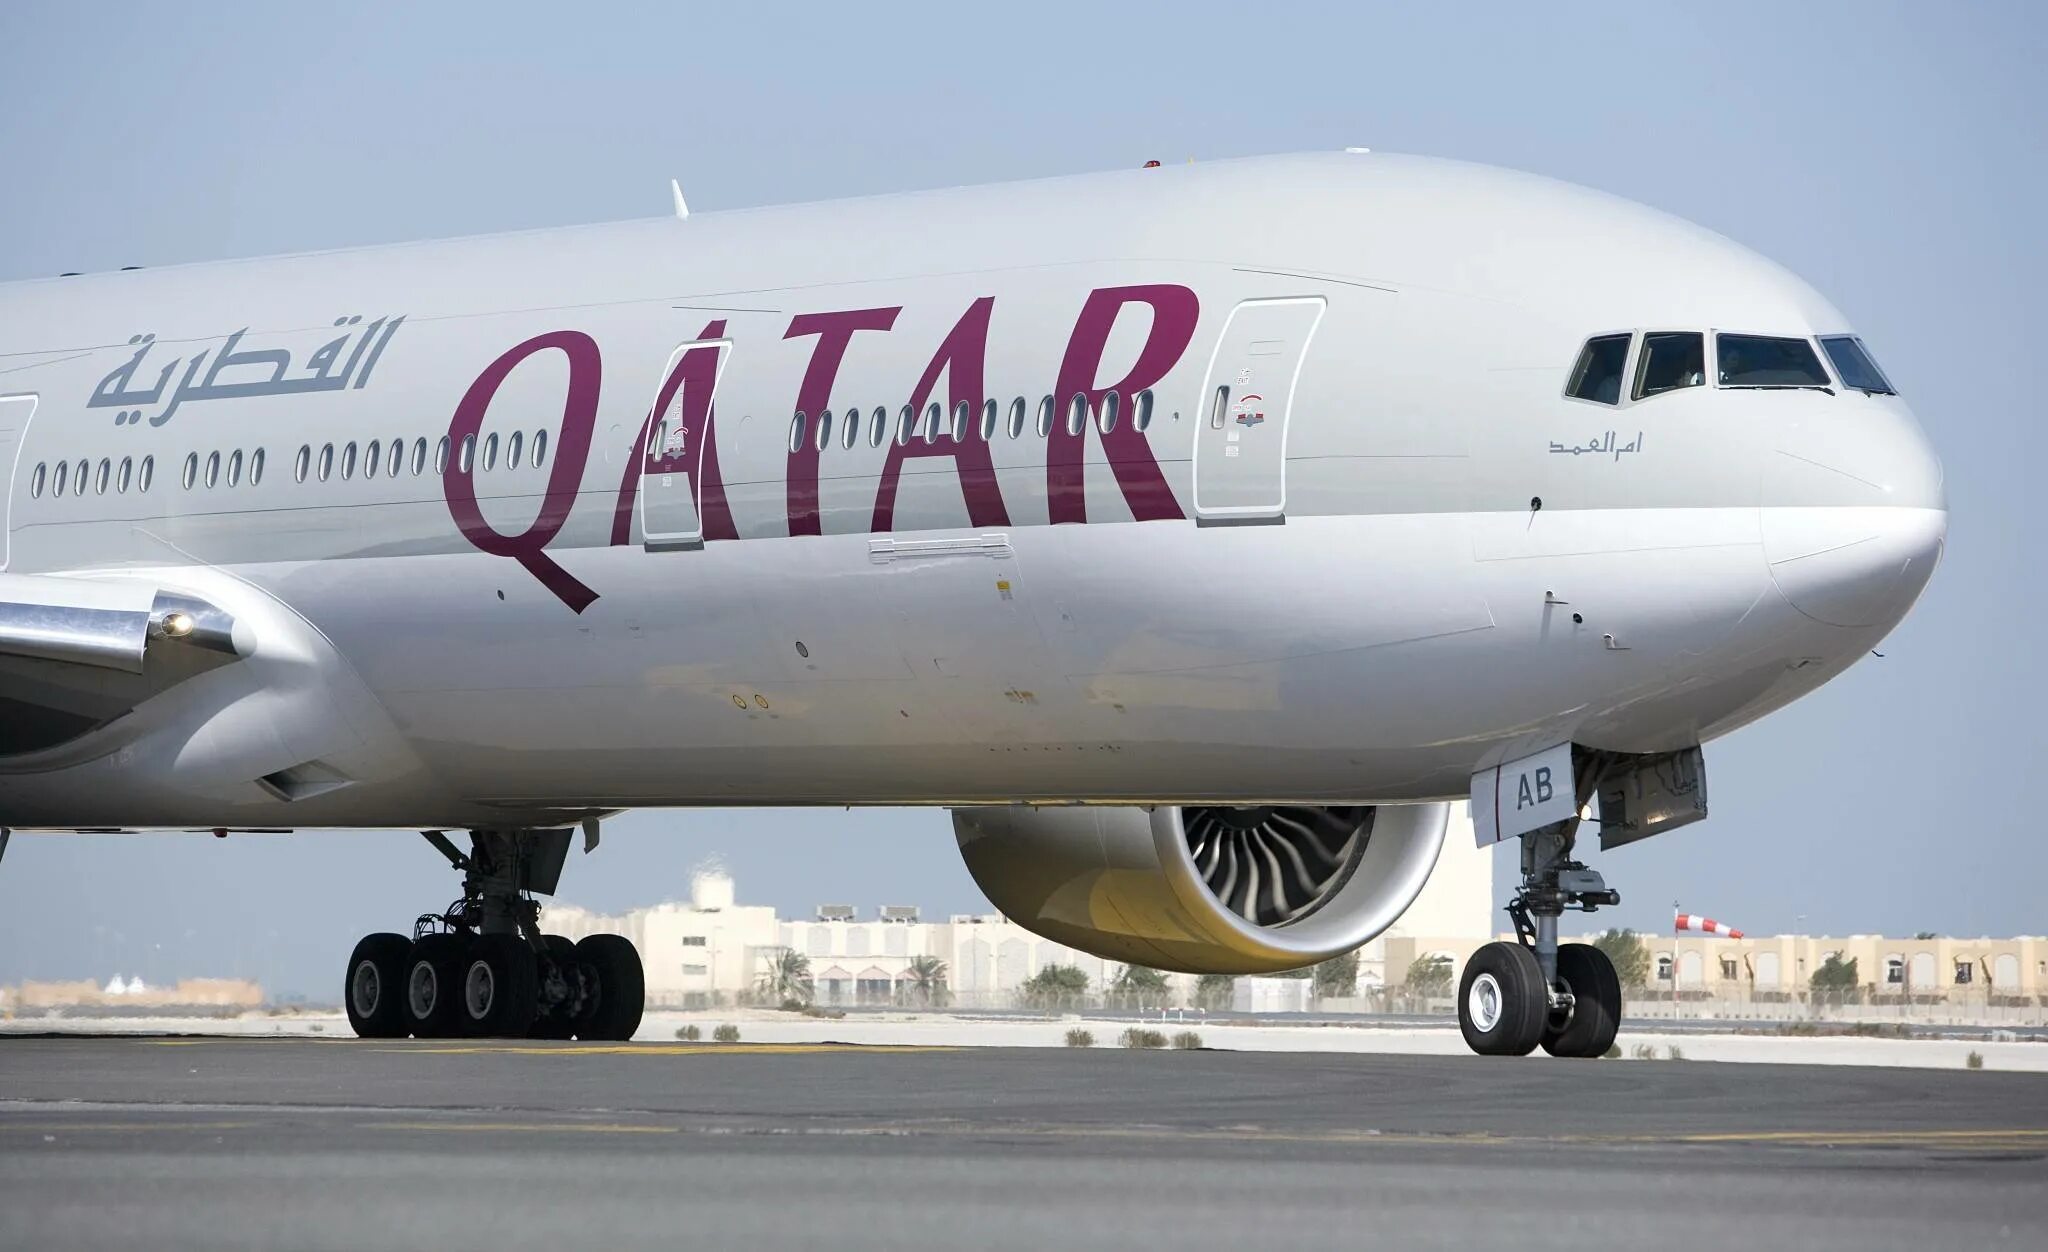 Катар дав. Самолет Катар Эйрвейз. Авиакомпания Qatar Airways самолеты. Авиалайнеры Катар. Катар авиалинии самолеты.